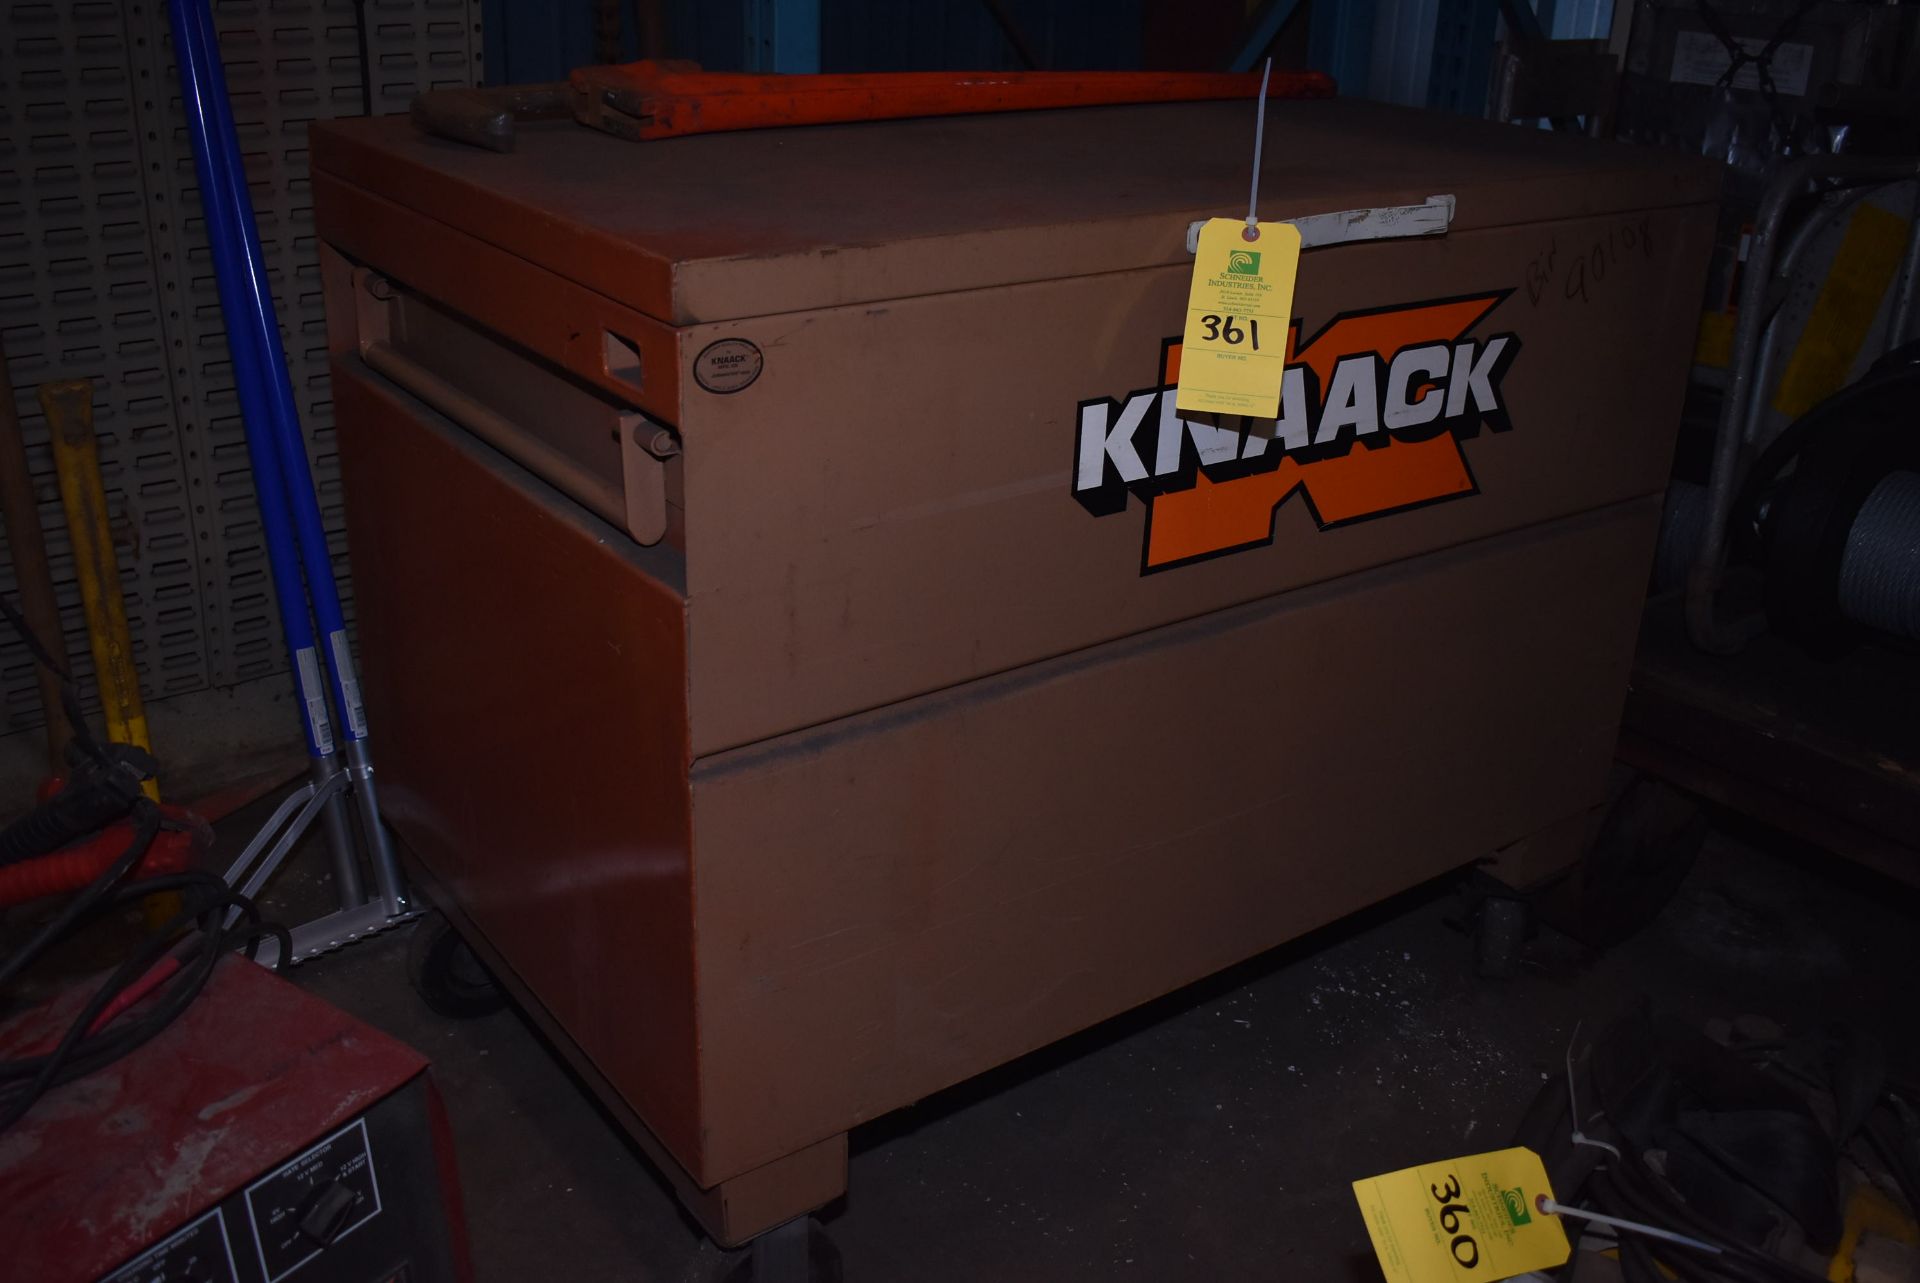 Knaack Jobmaster 4830 Job Box